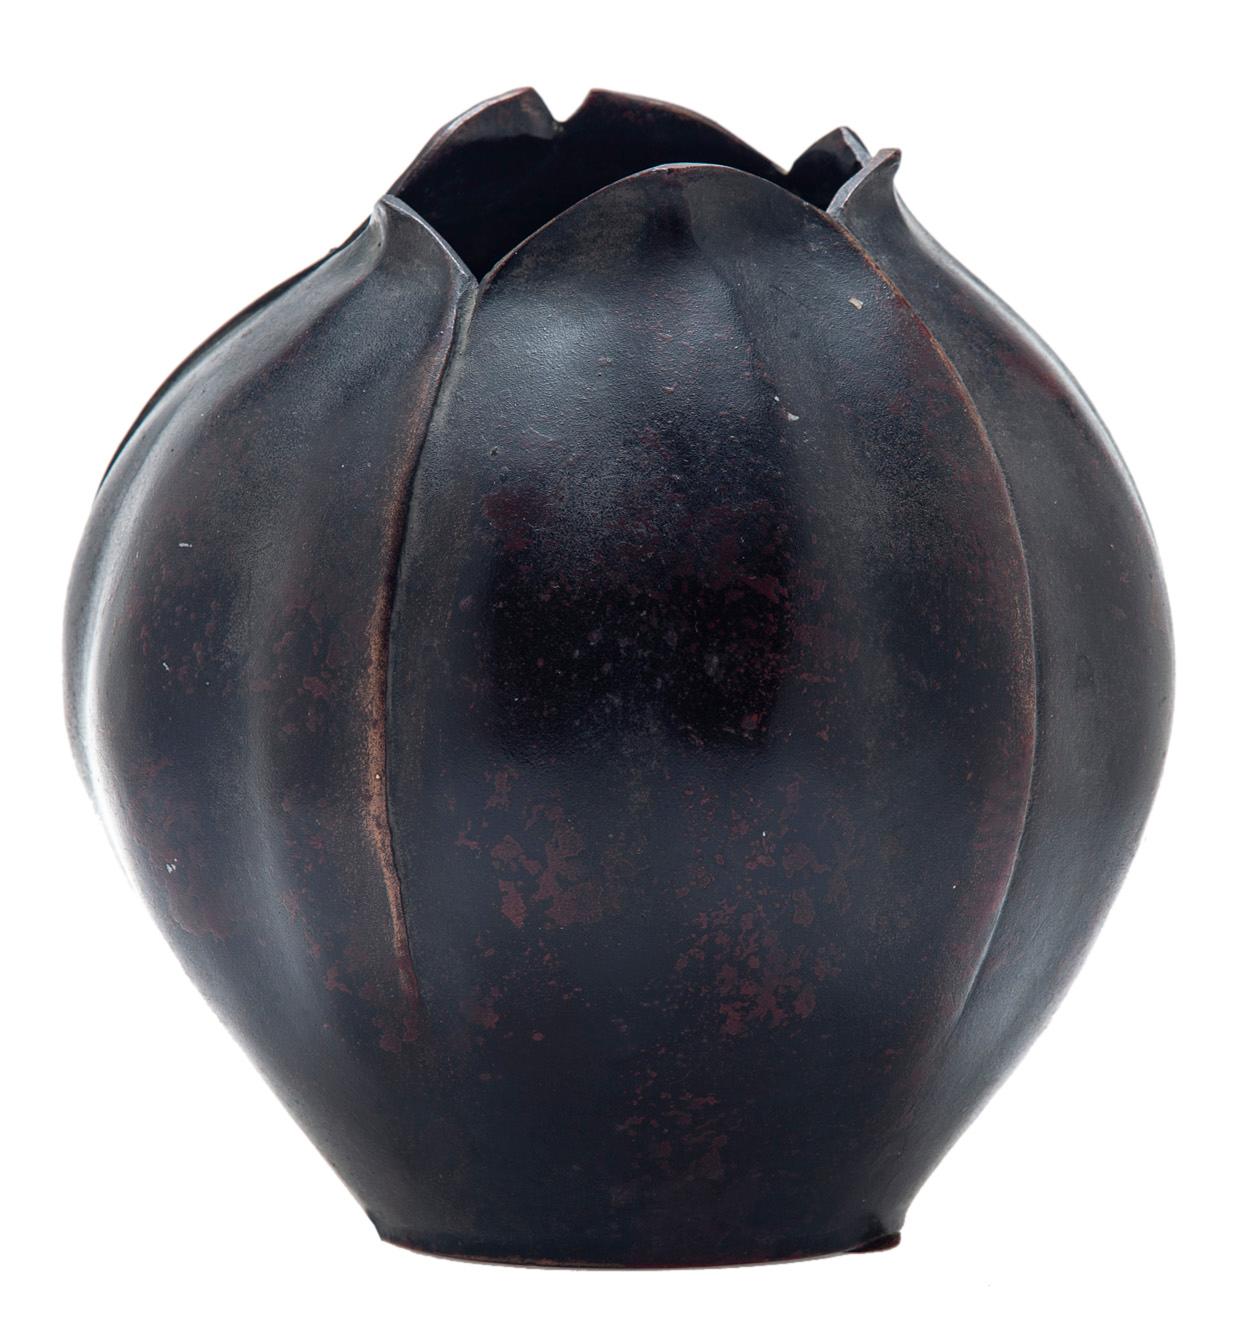 Organic Modern 20th Century Japanese Lotus-Form Vase